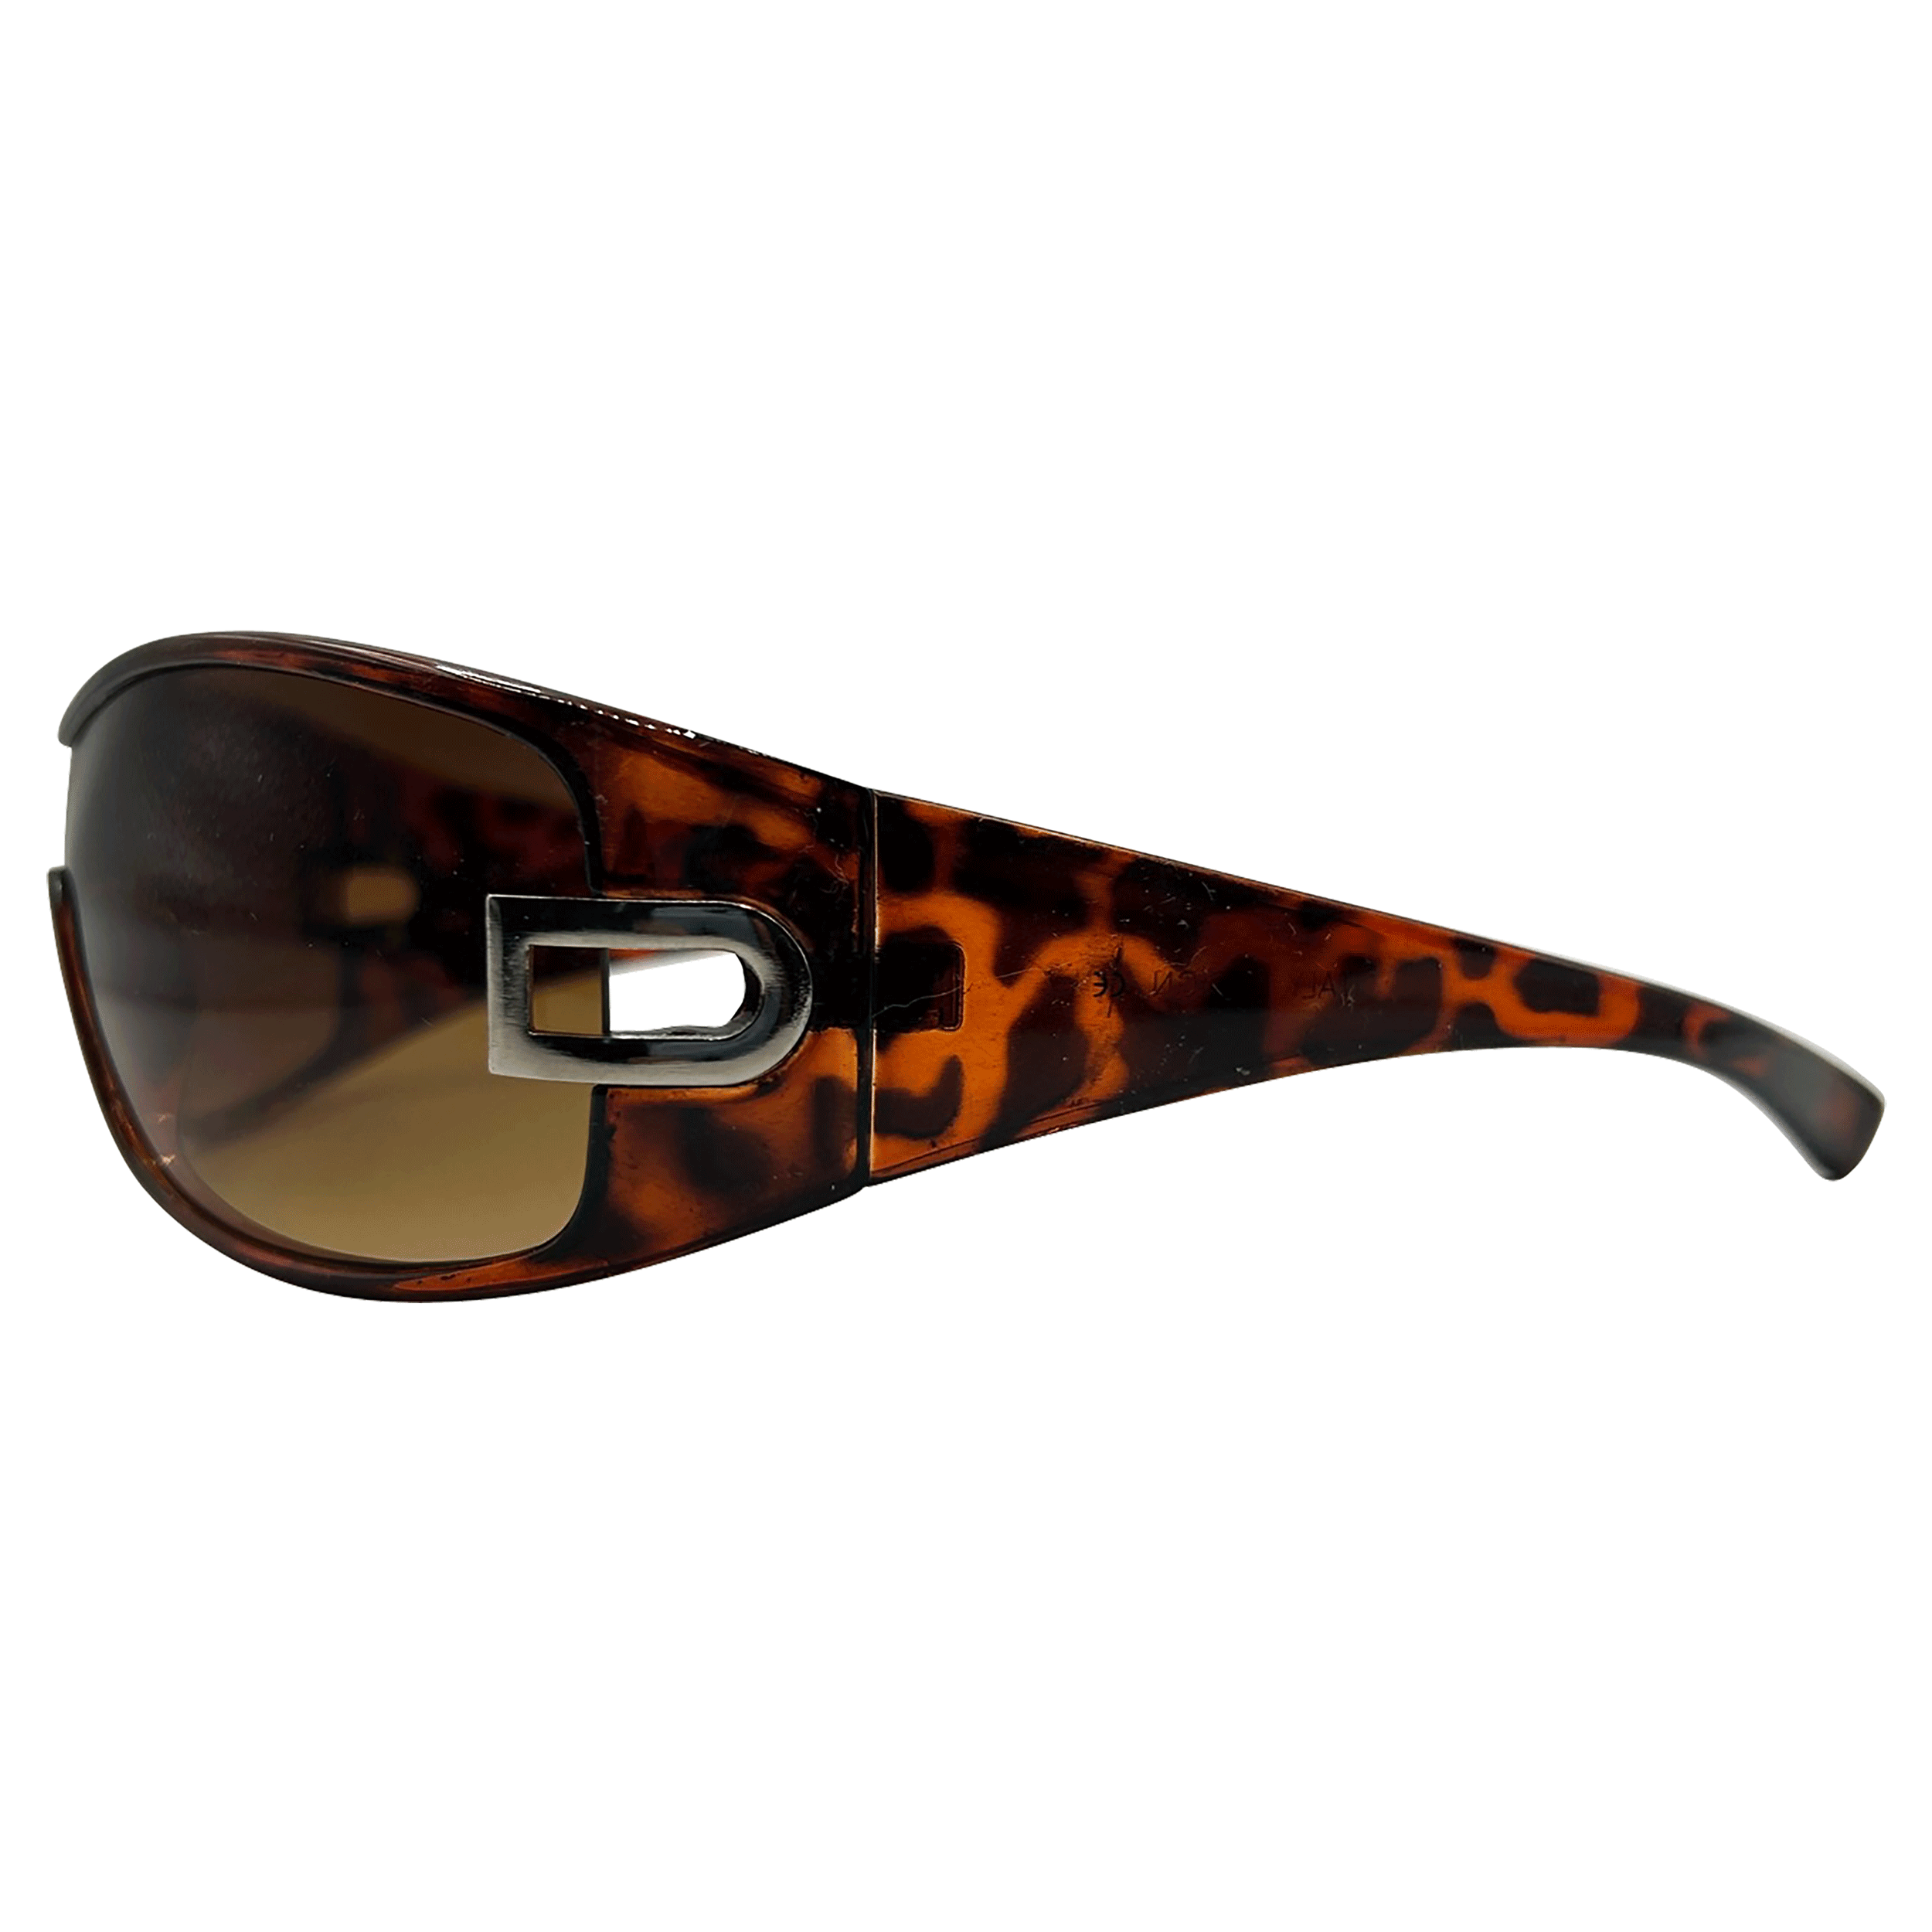 GOODIE Sport Shield Sunglasses